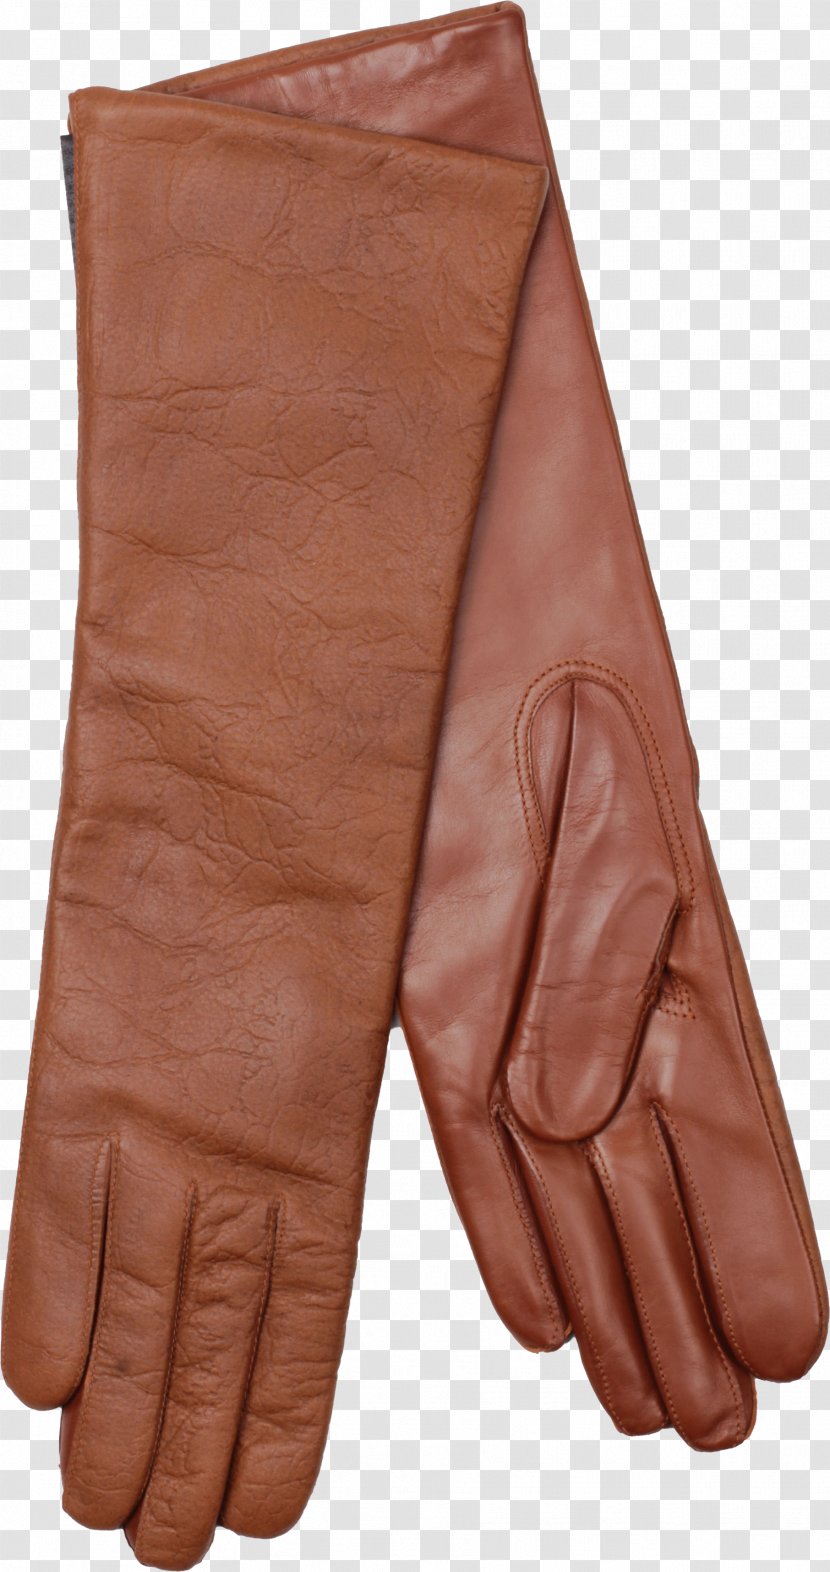 Glove Clothing Leather Clip Art - Image File Formats - Gloves Transparent PNG